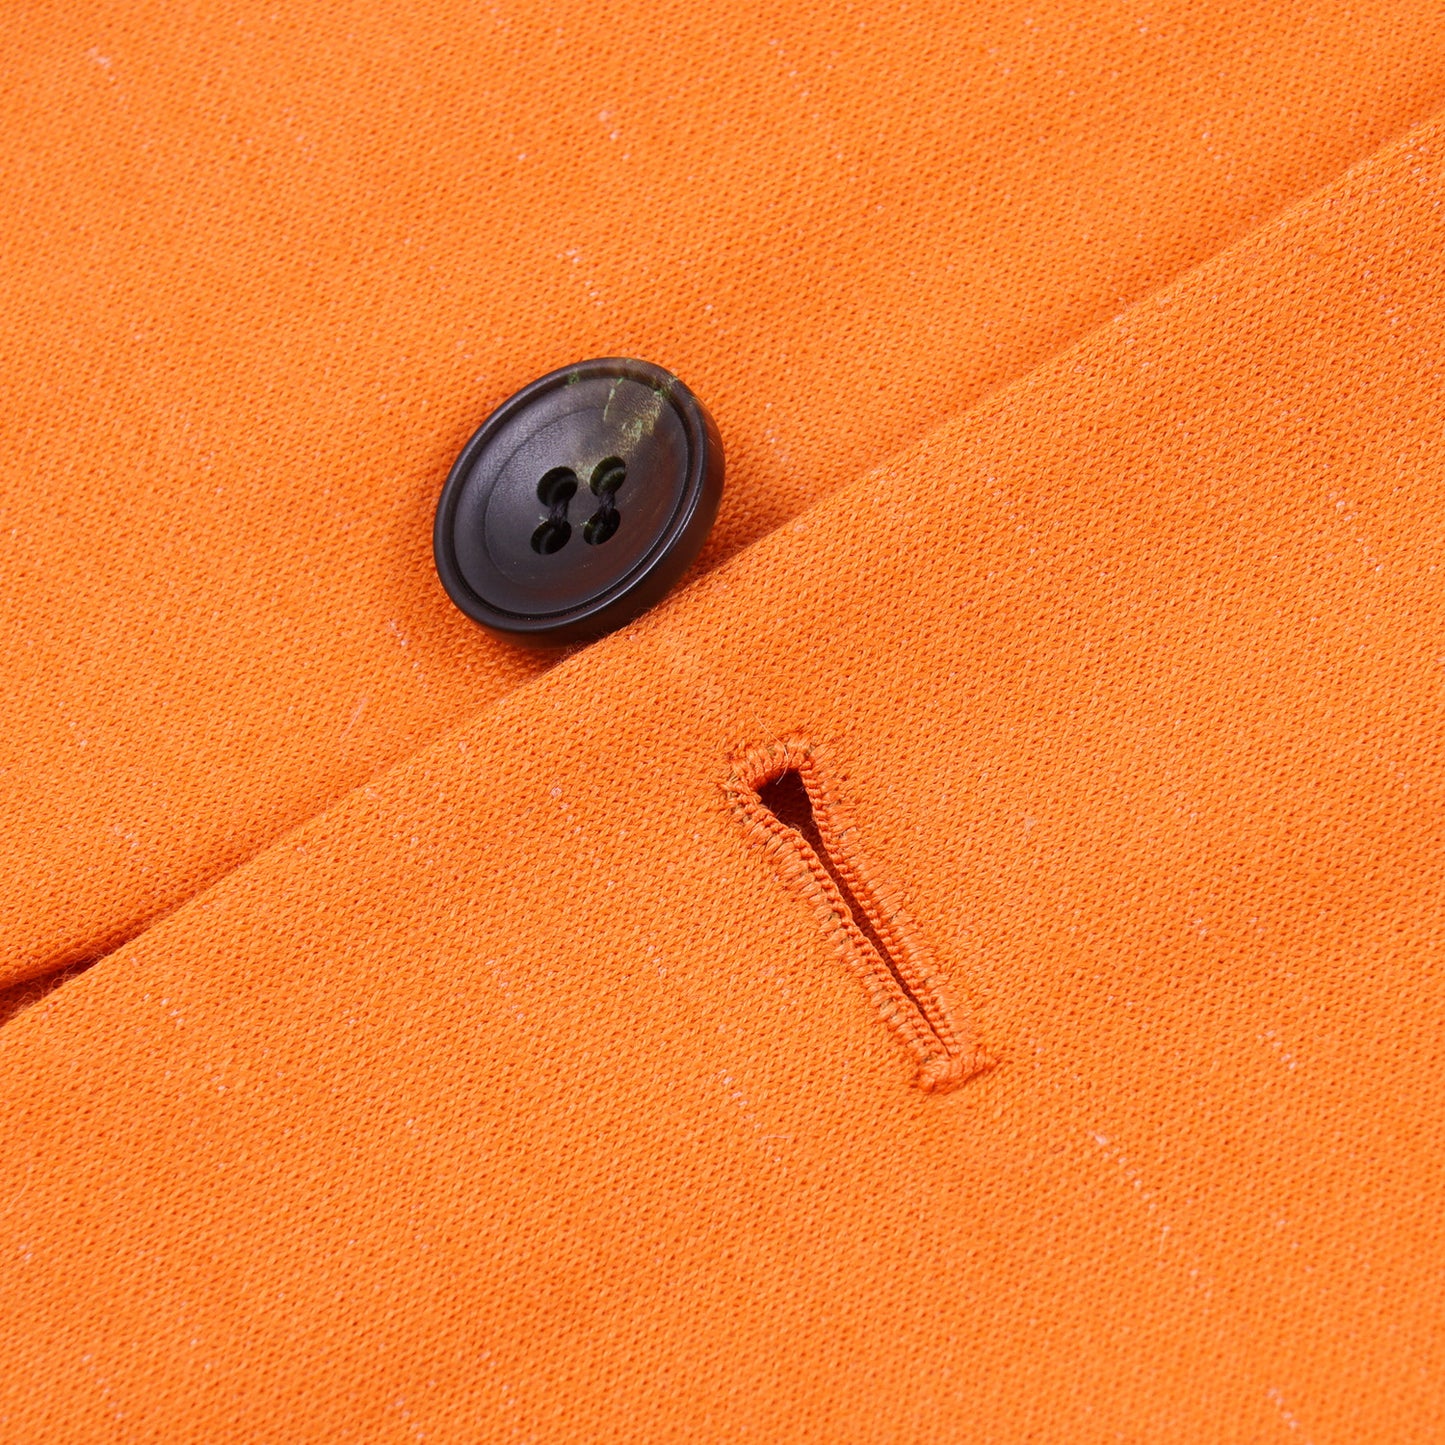 Kiton Jersey Cashmere Sport Coat - Top Shelf Apparel